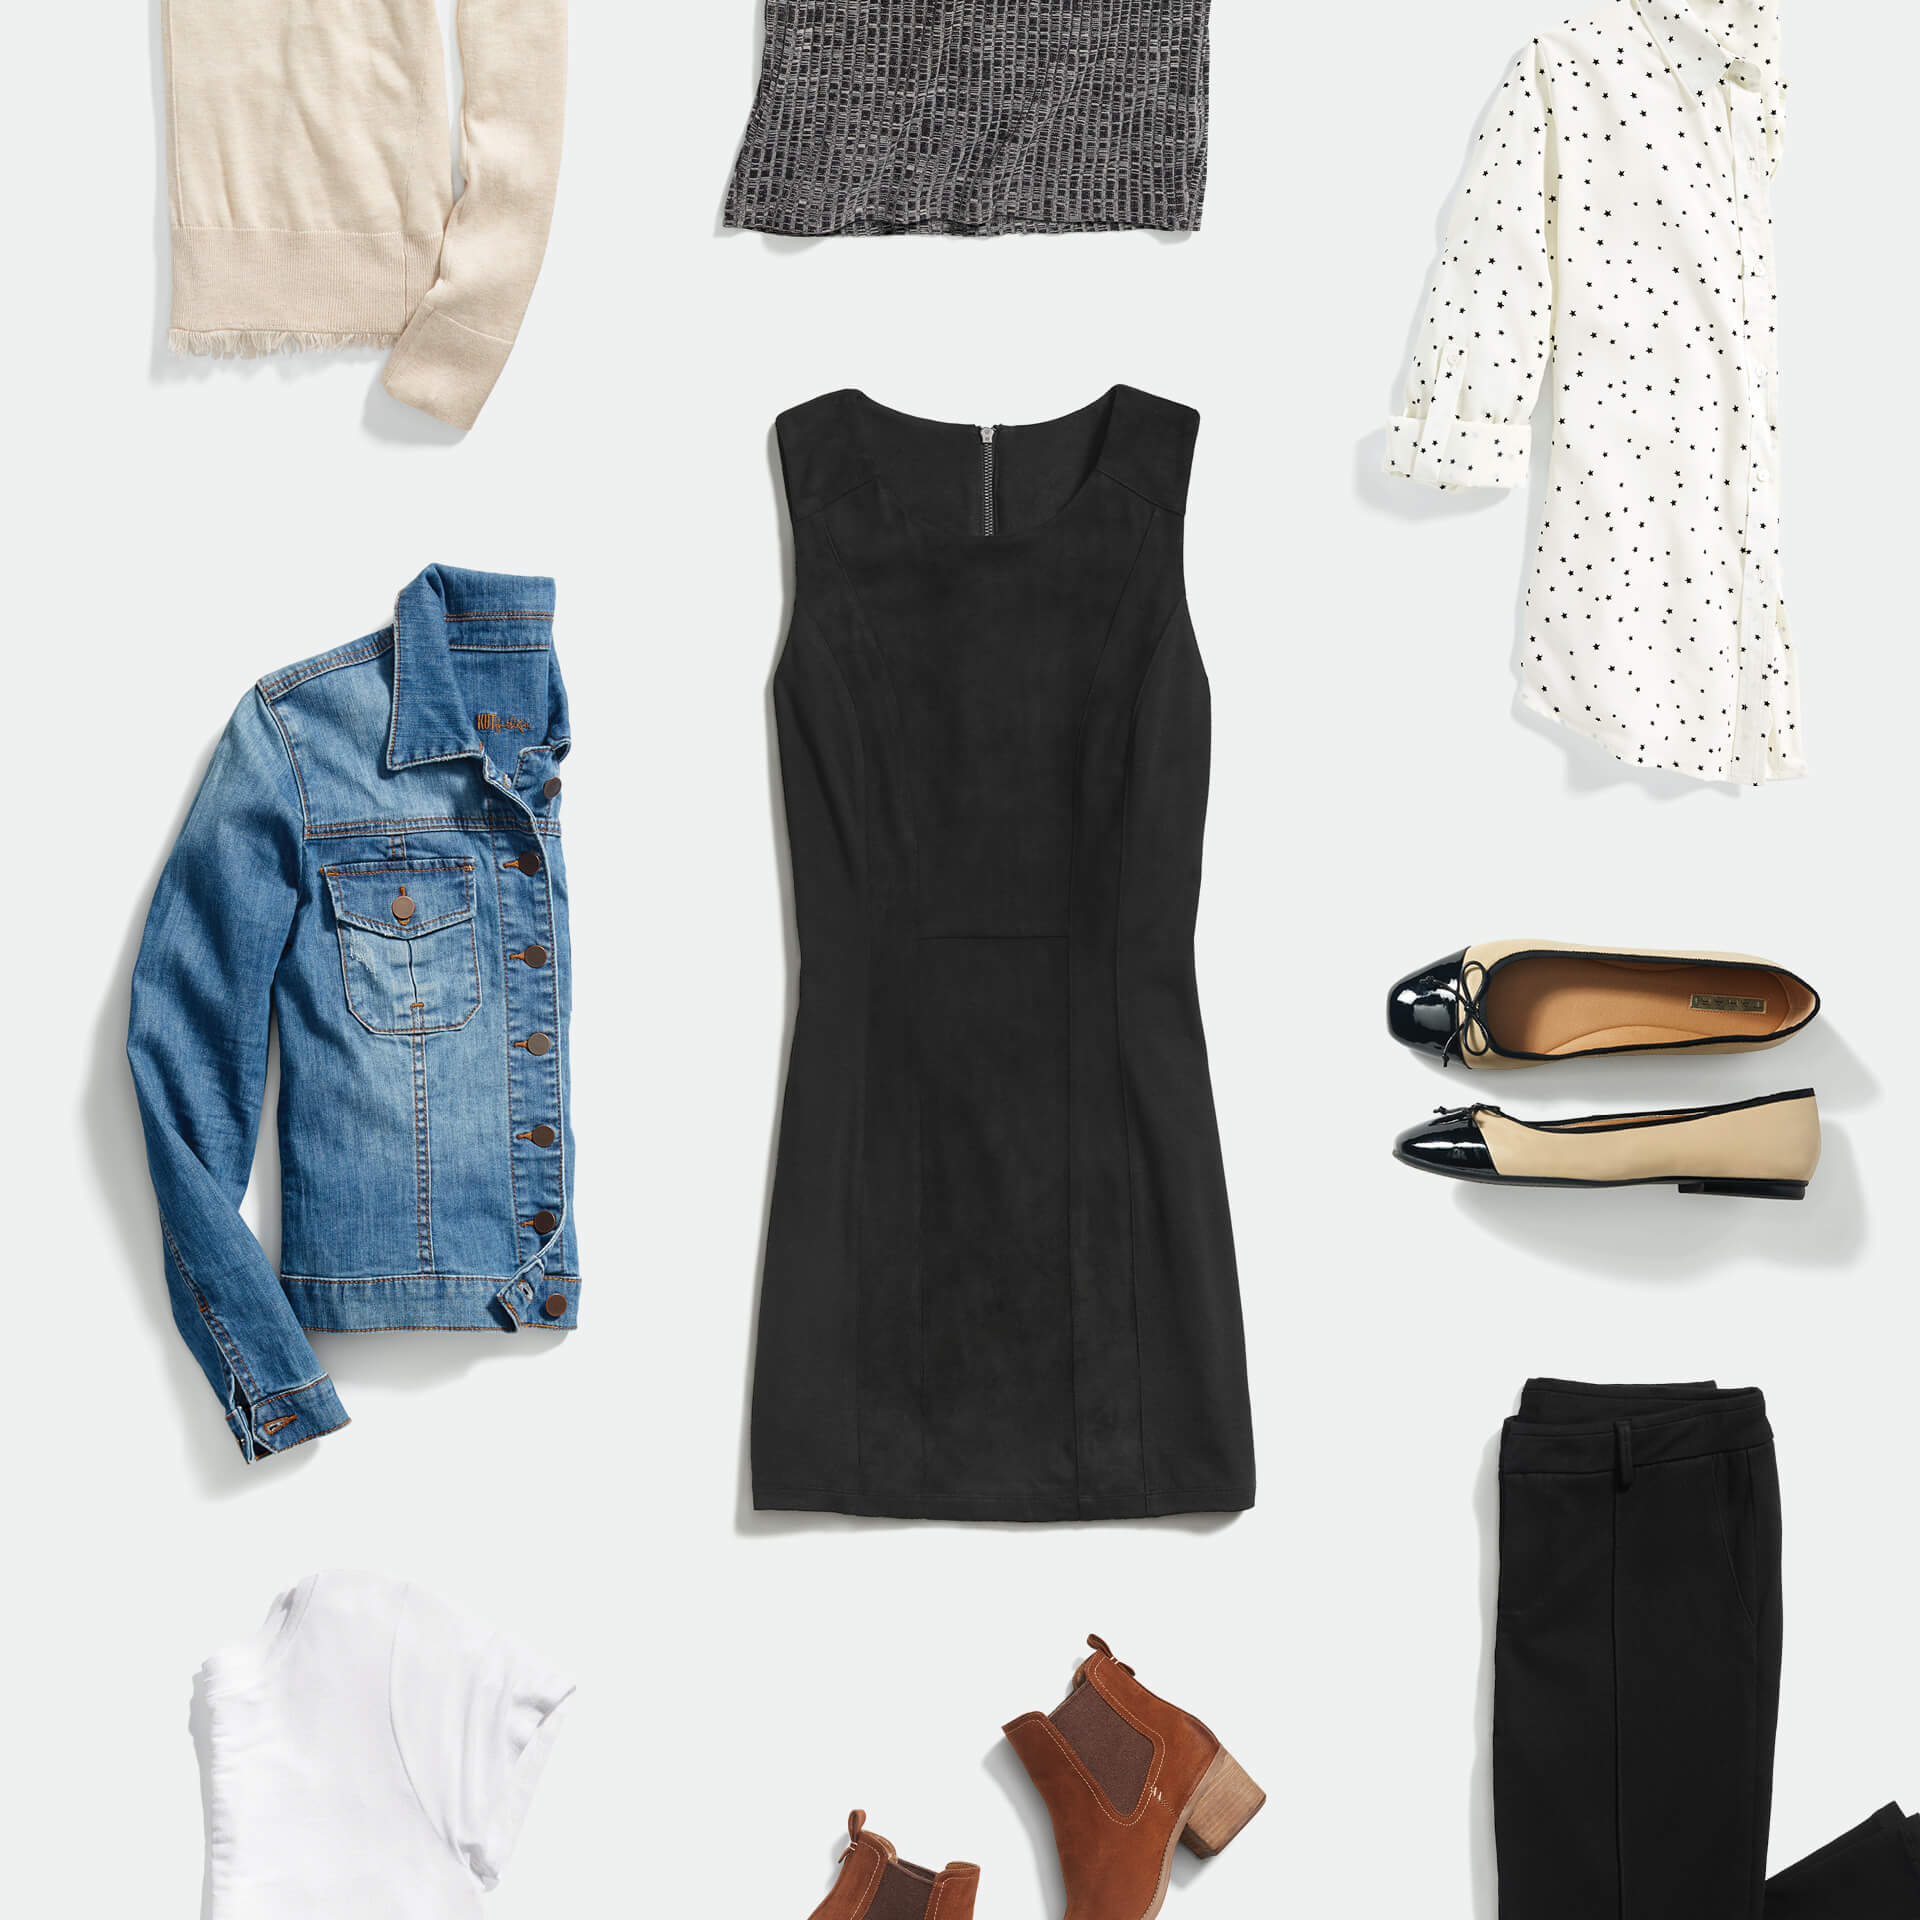 20 Wardrobe Essentials That Will Simplify Your Closet